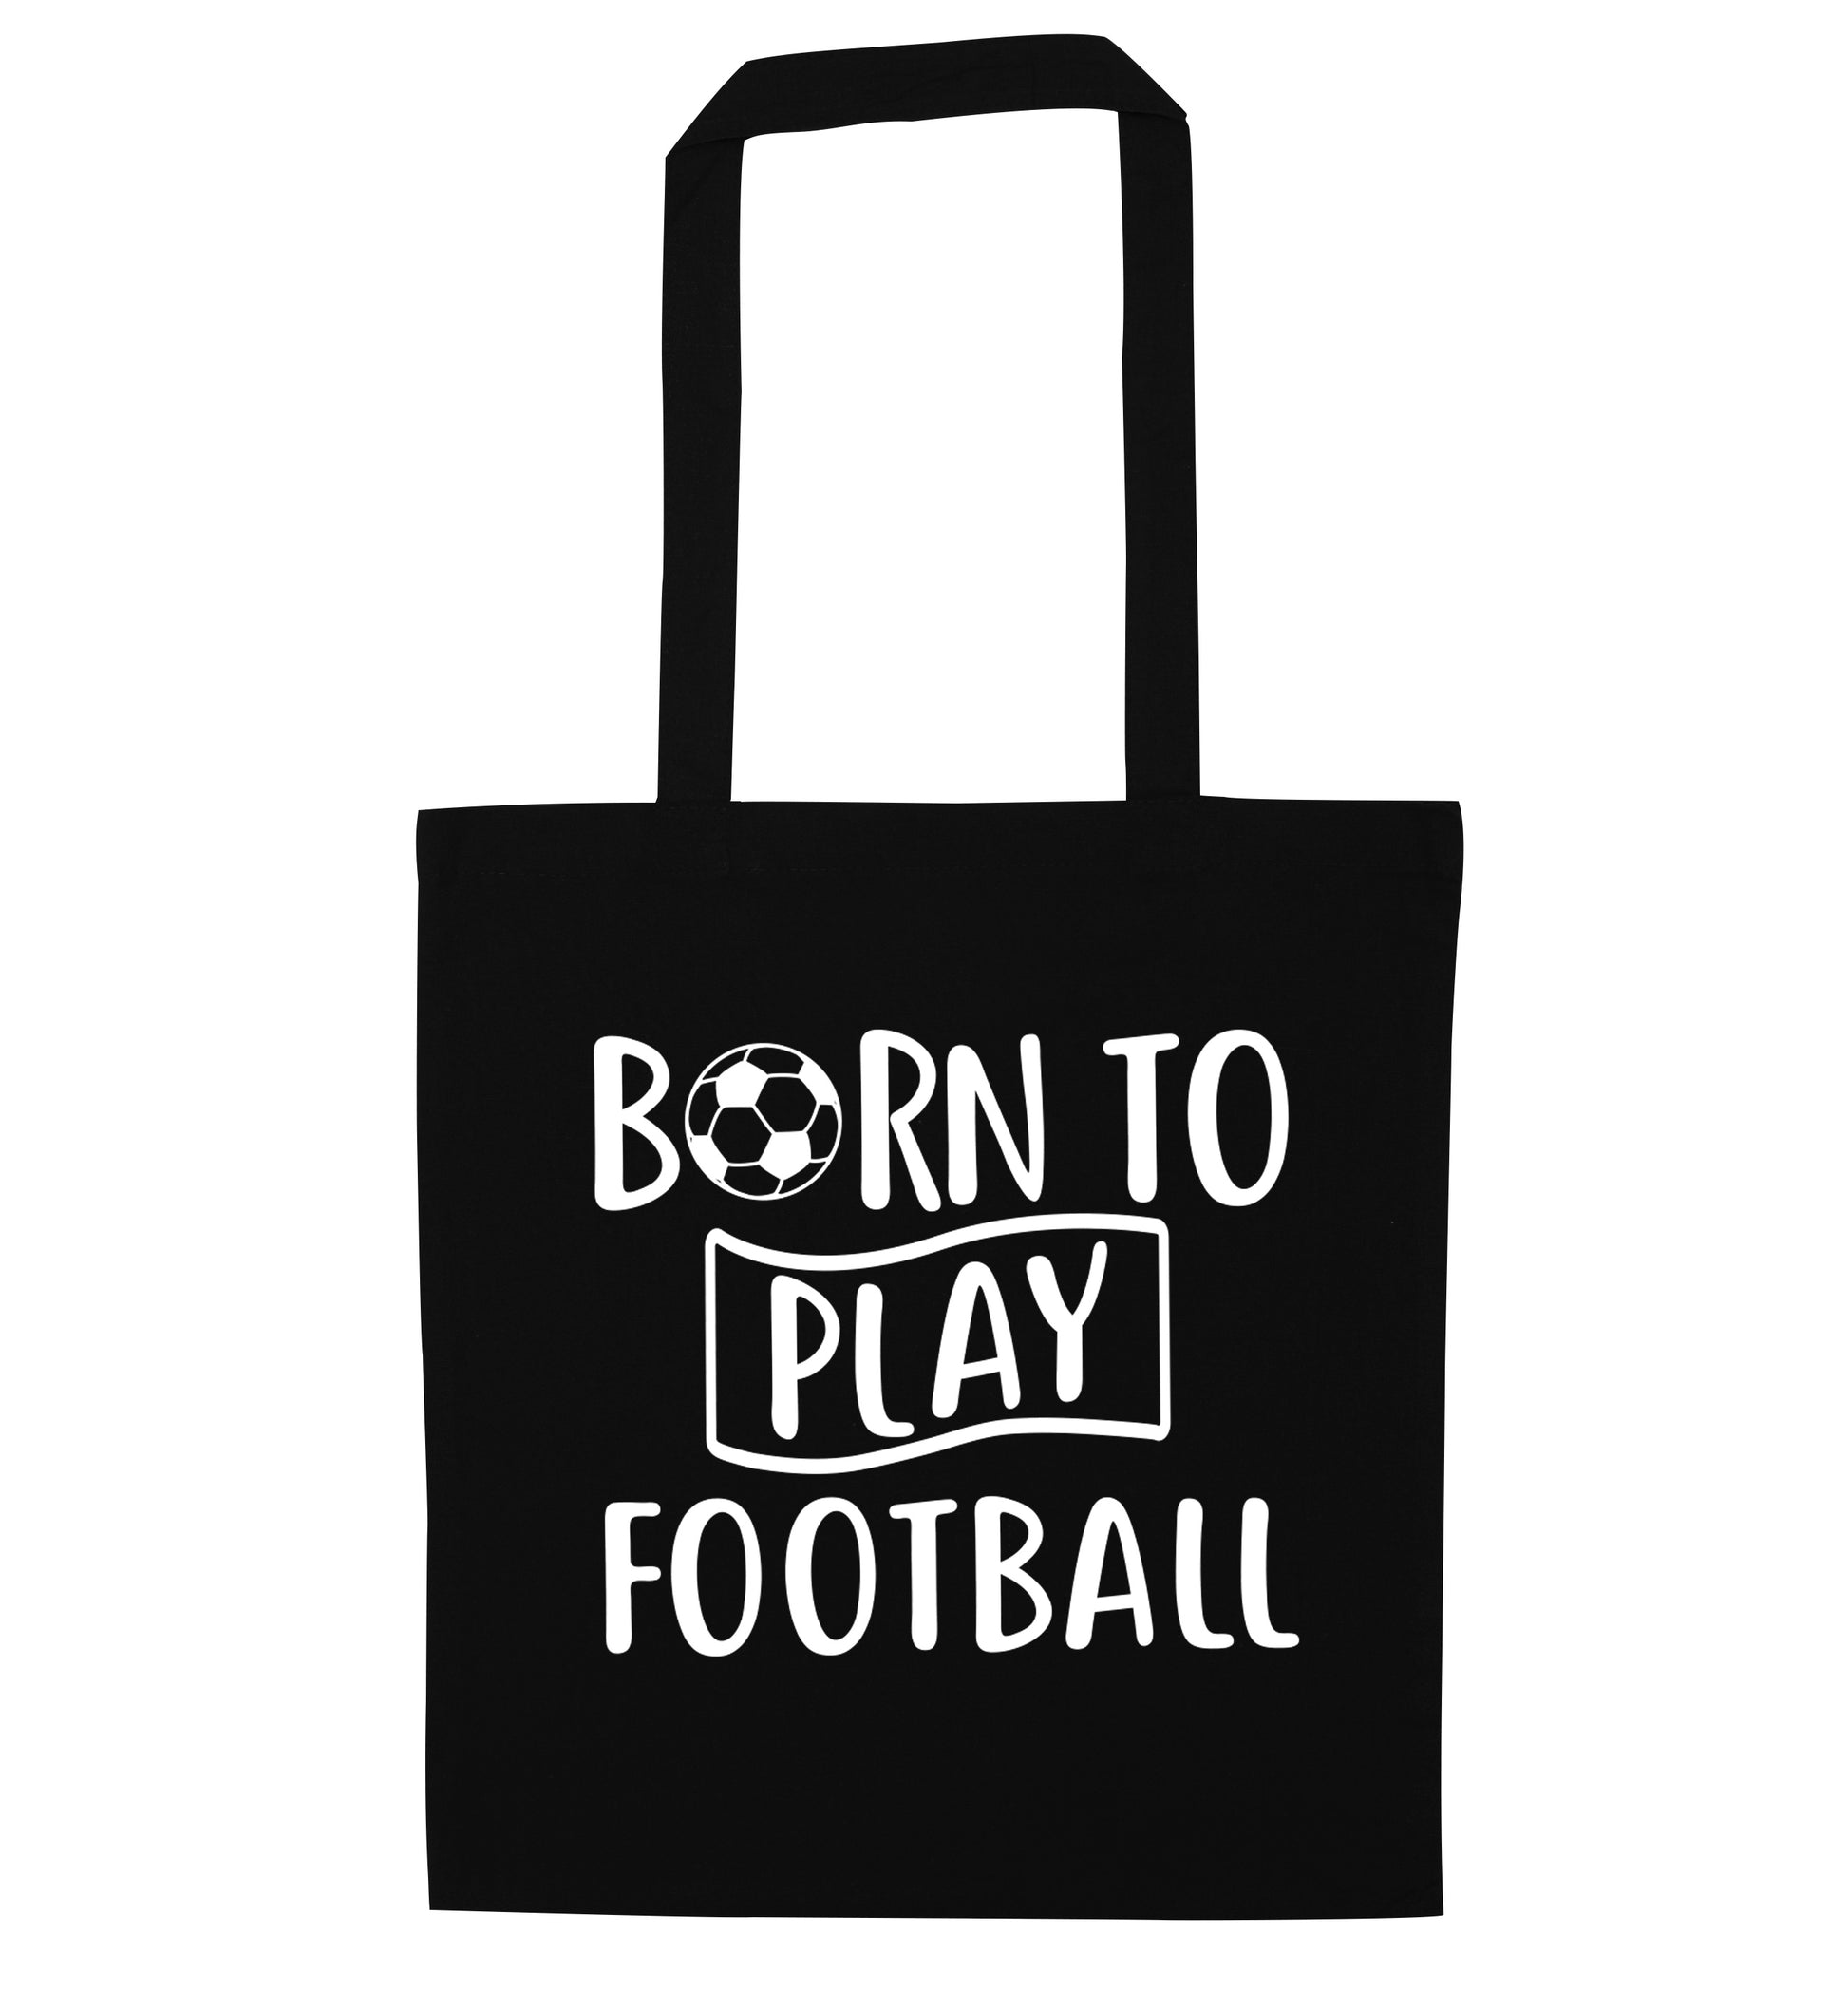 Born to play football black tote bag